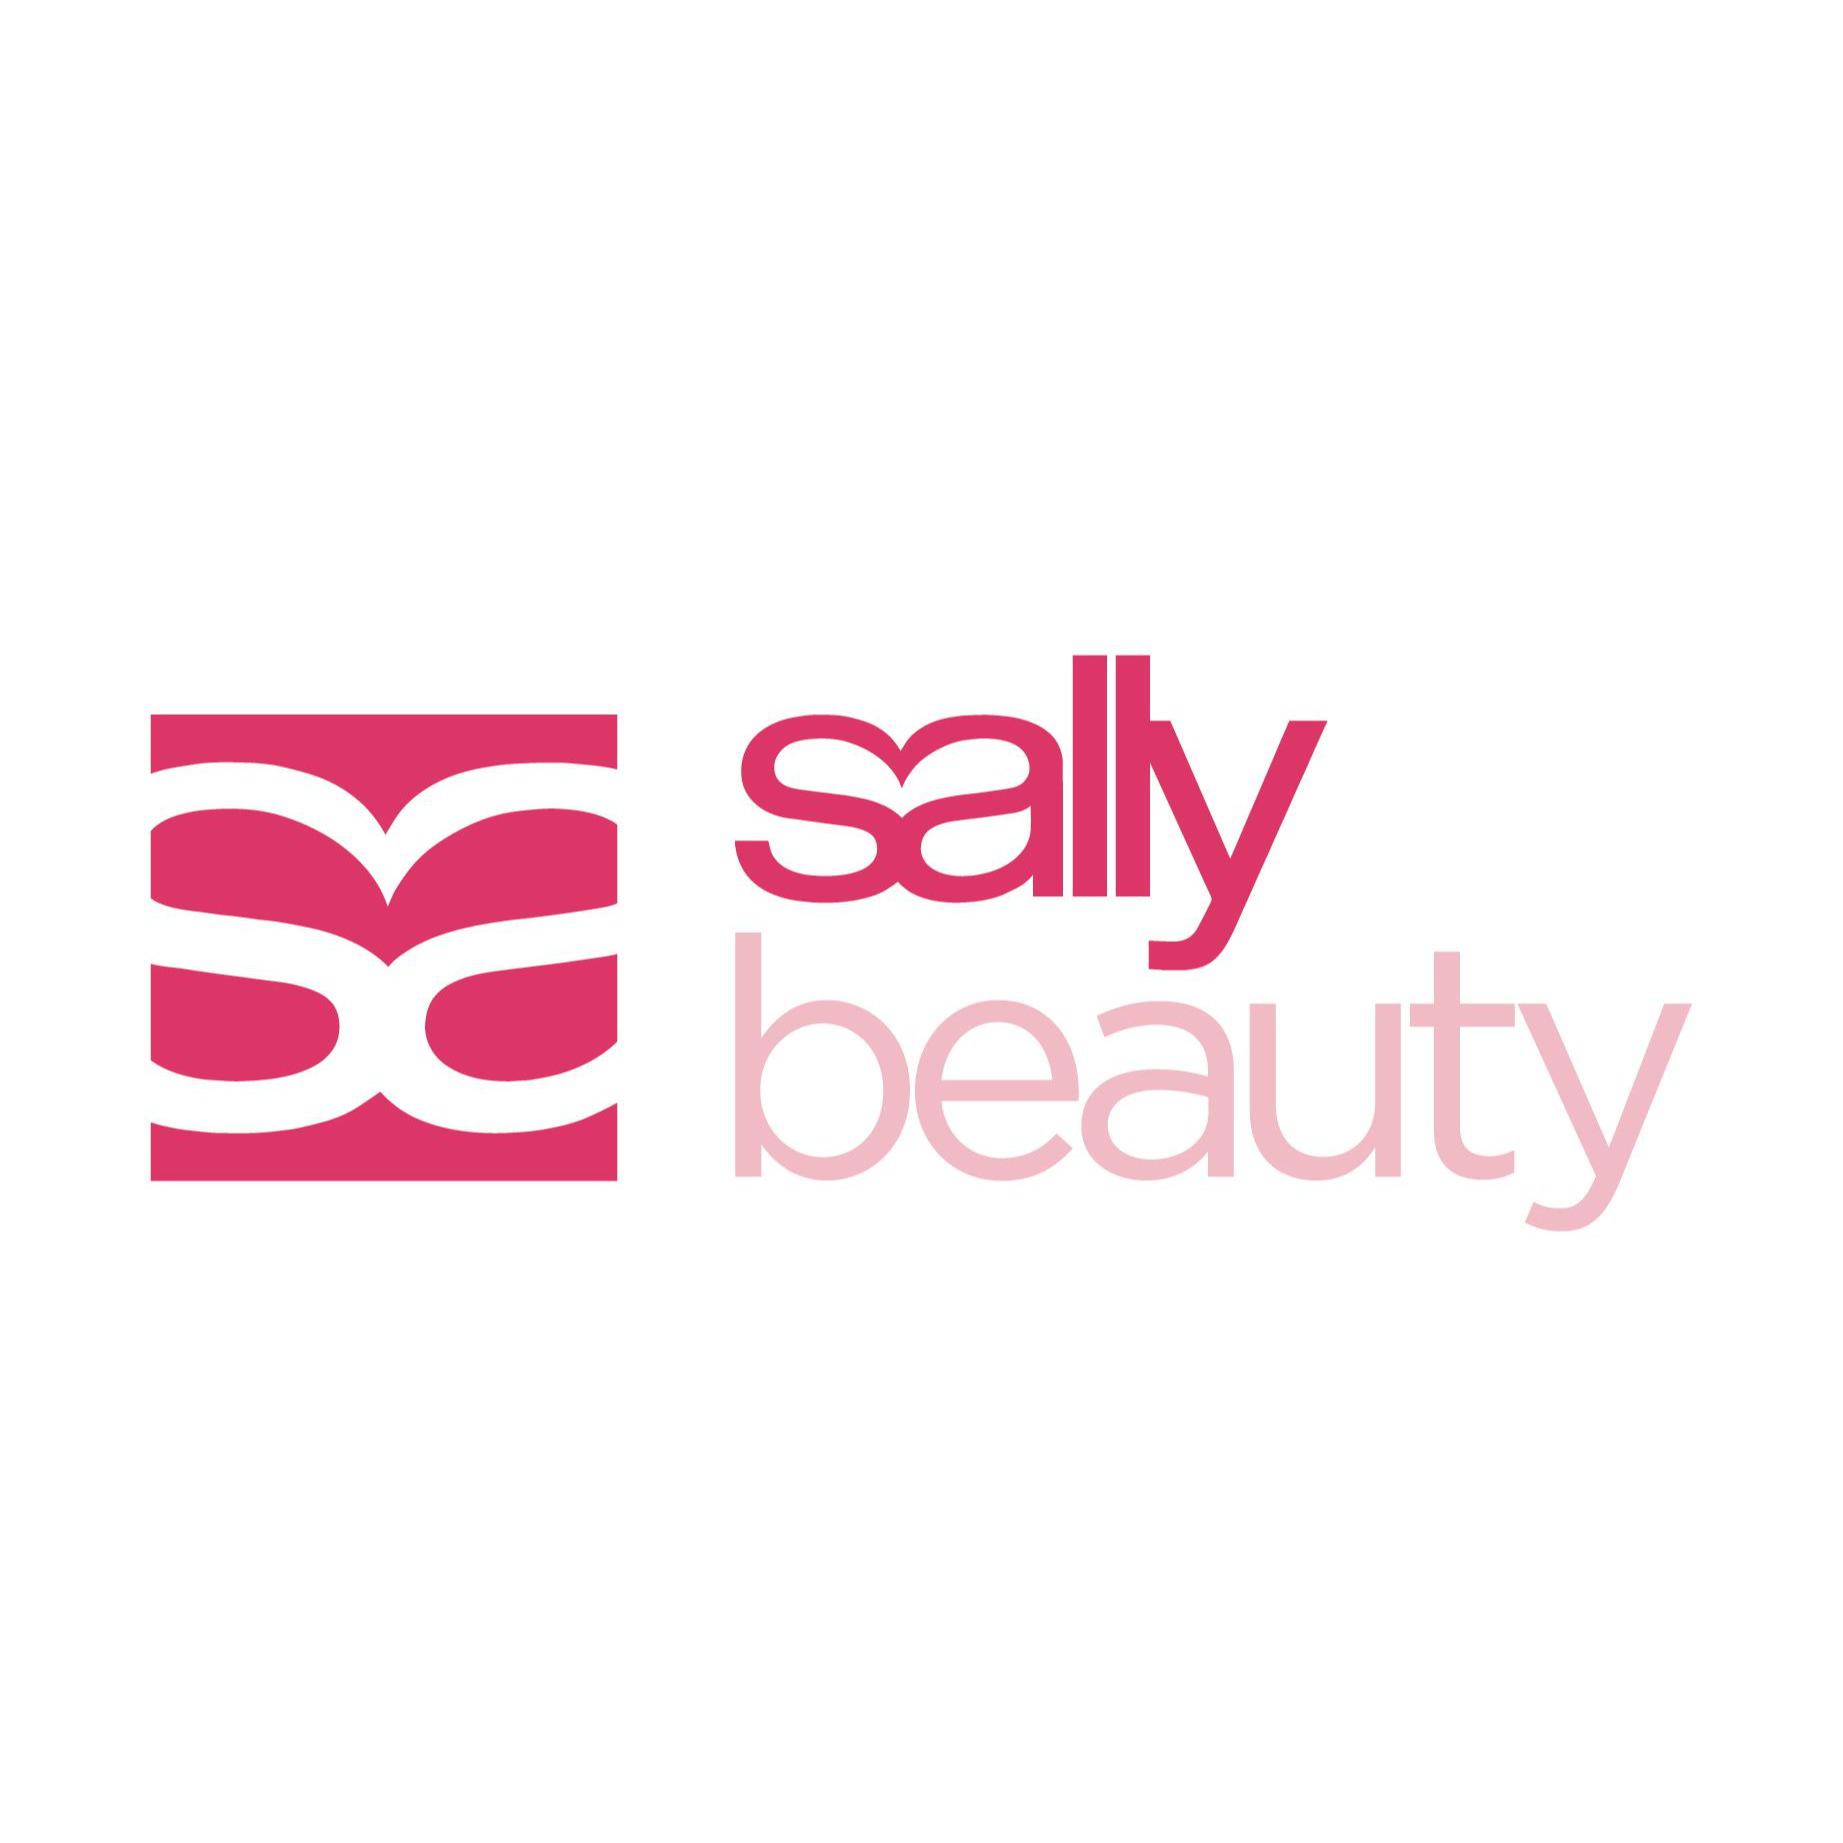 Sally Beauty - Aylesbury, Buckinghamshire HP19 8UP - 01296 427347 | ShowMeLocal.com